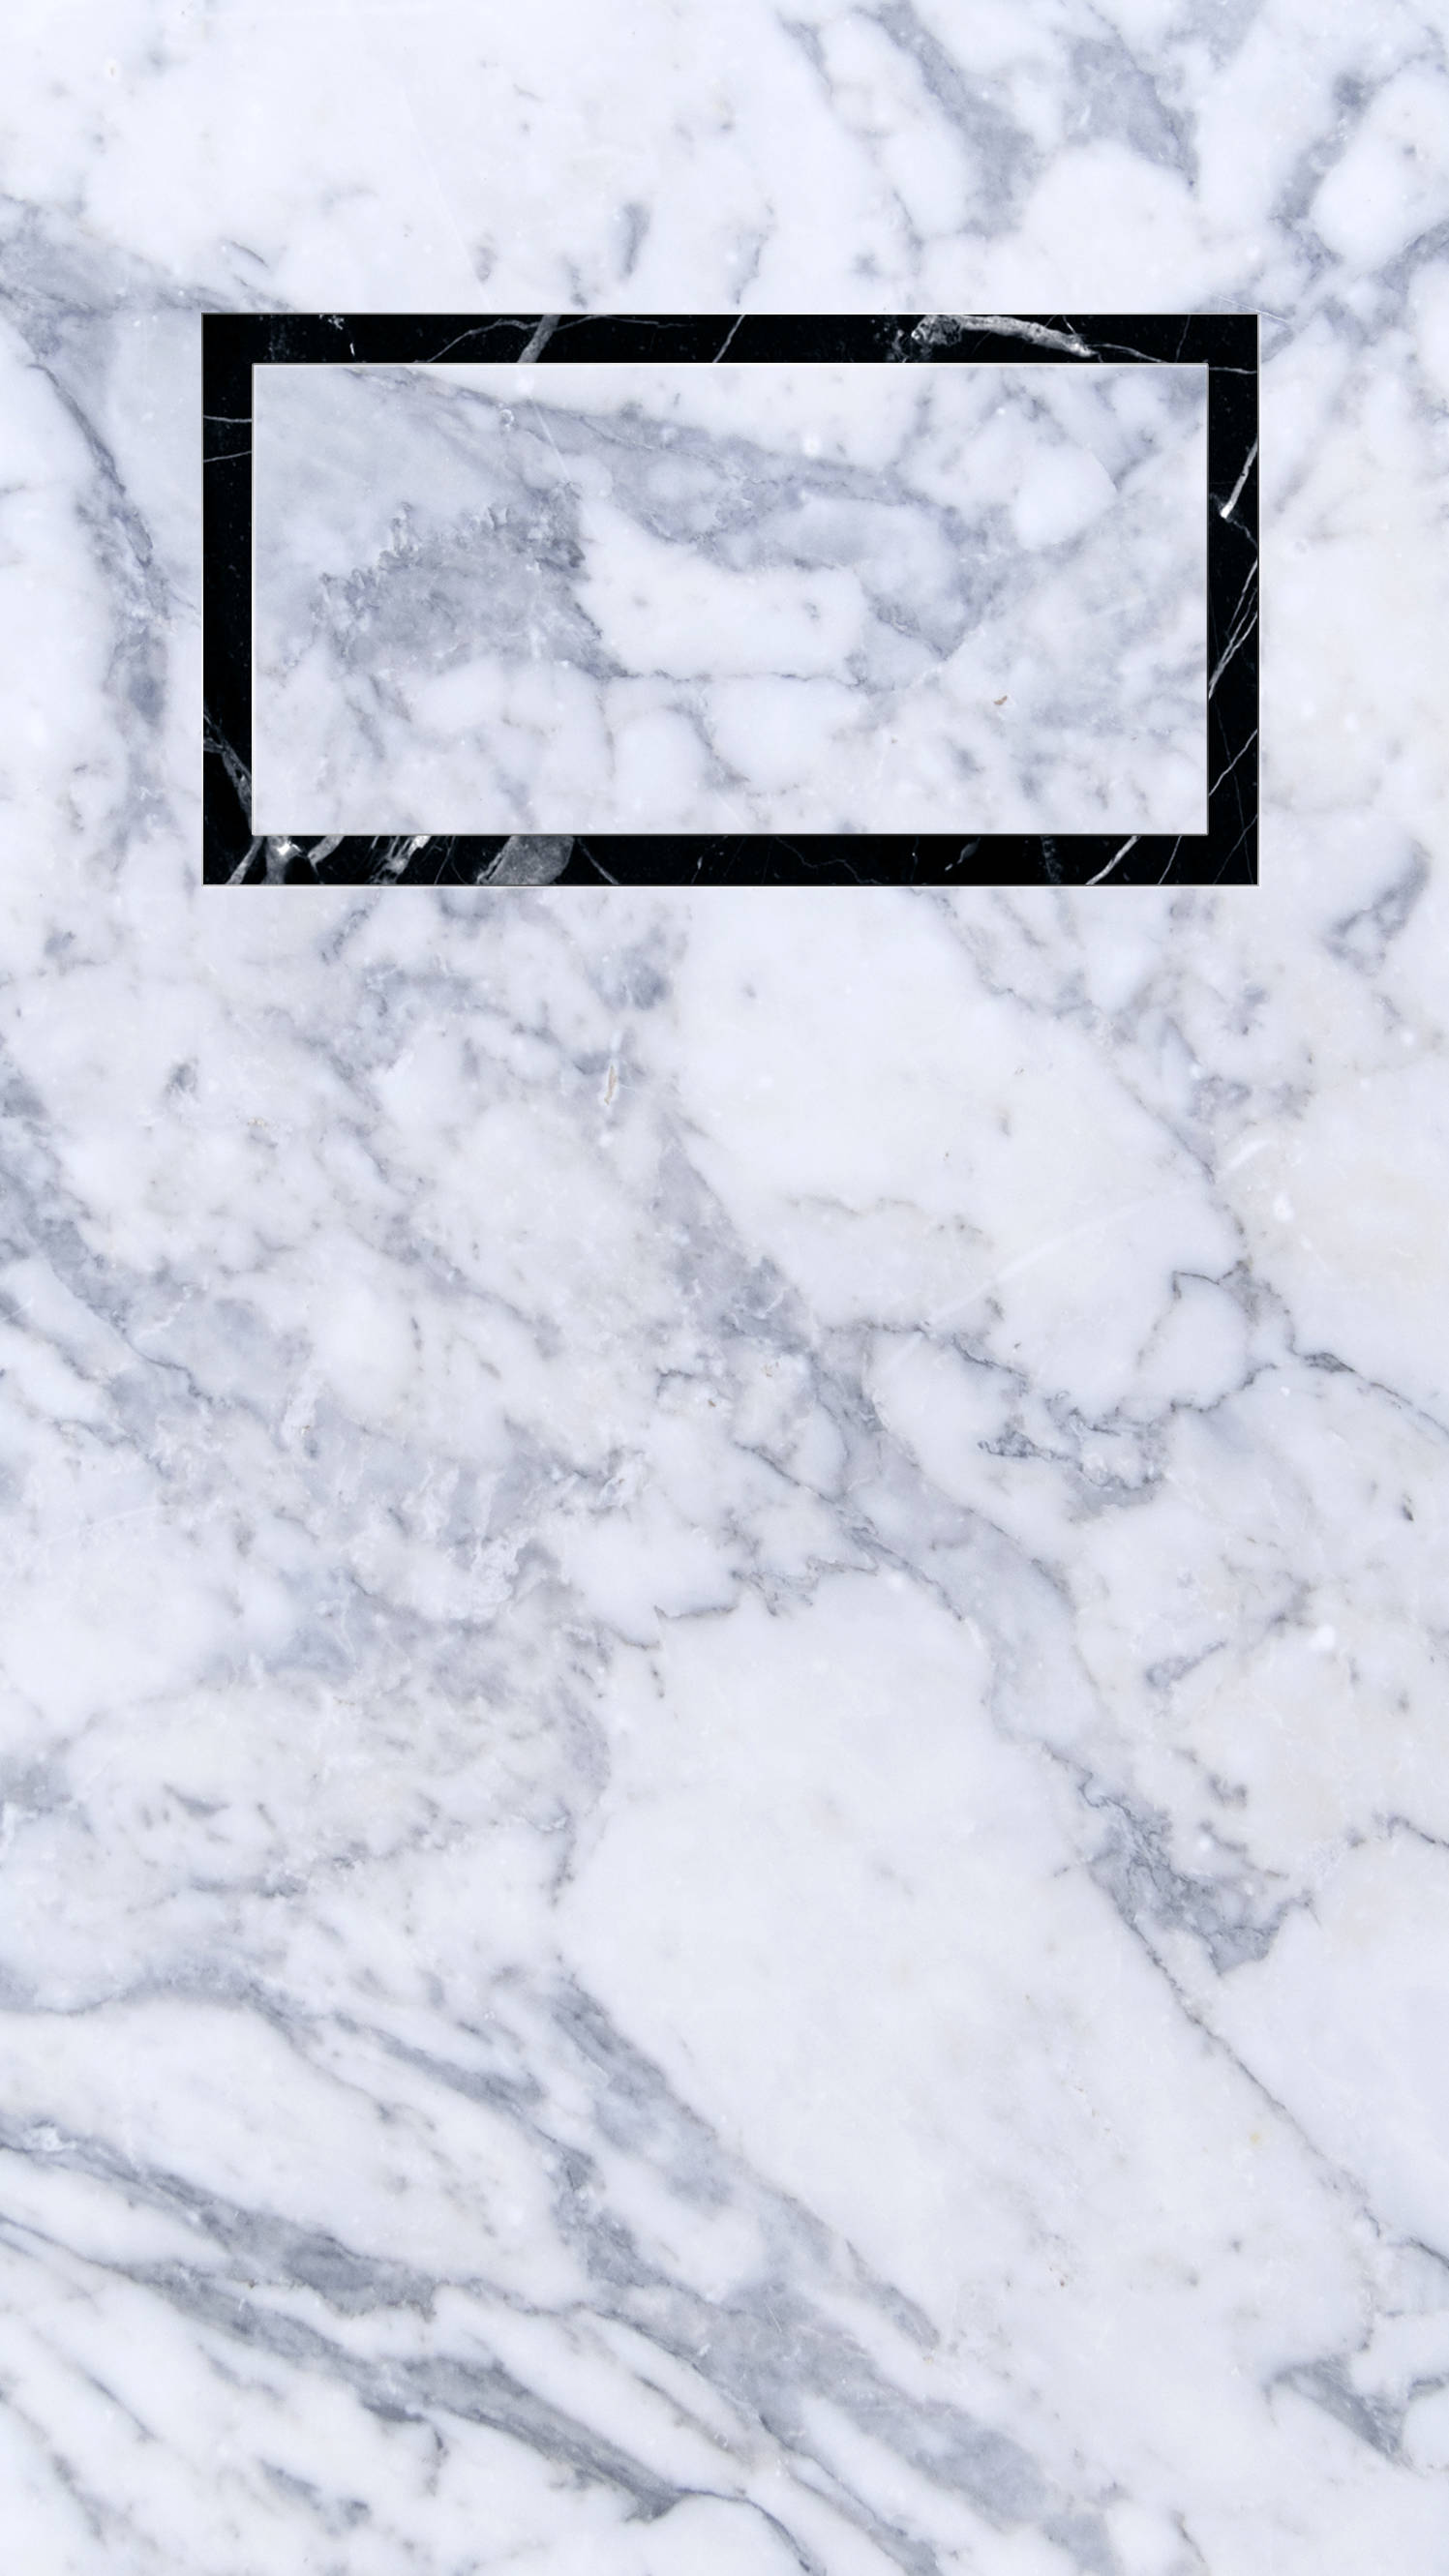 Caption: Sleek Black Clock on Elegant White Marble iPhone Background Wallpaper